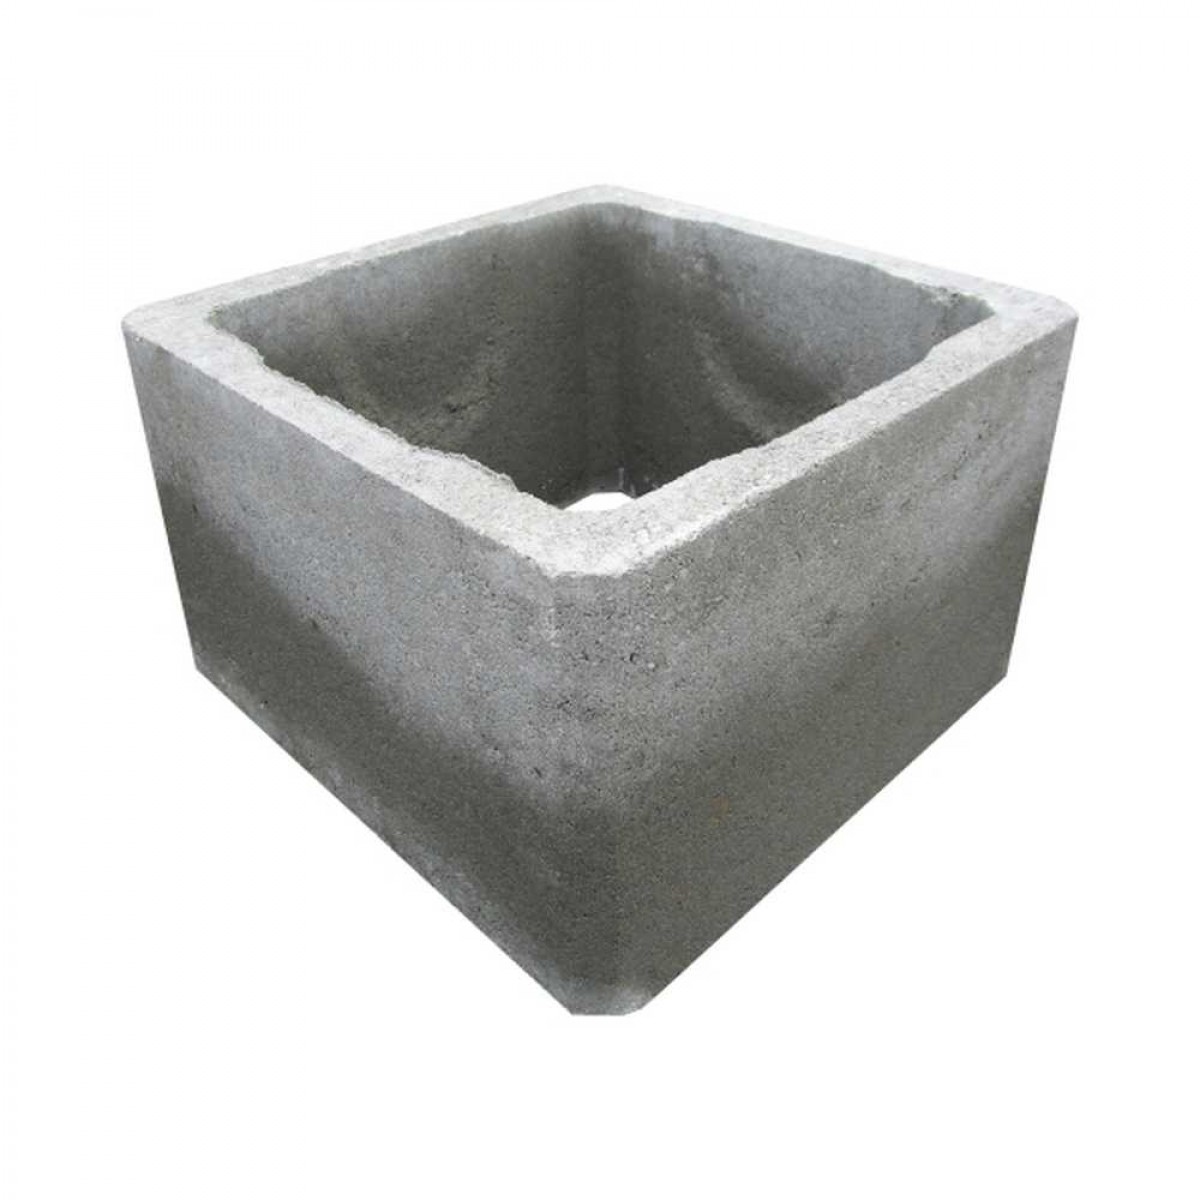 Opzetstuk beton 60 x 60 x 30 cm kopen Bouwkampioen